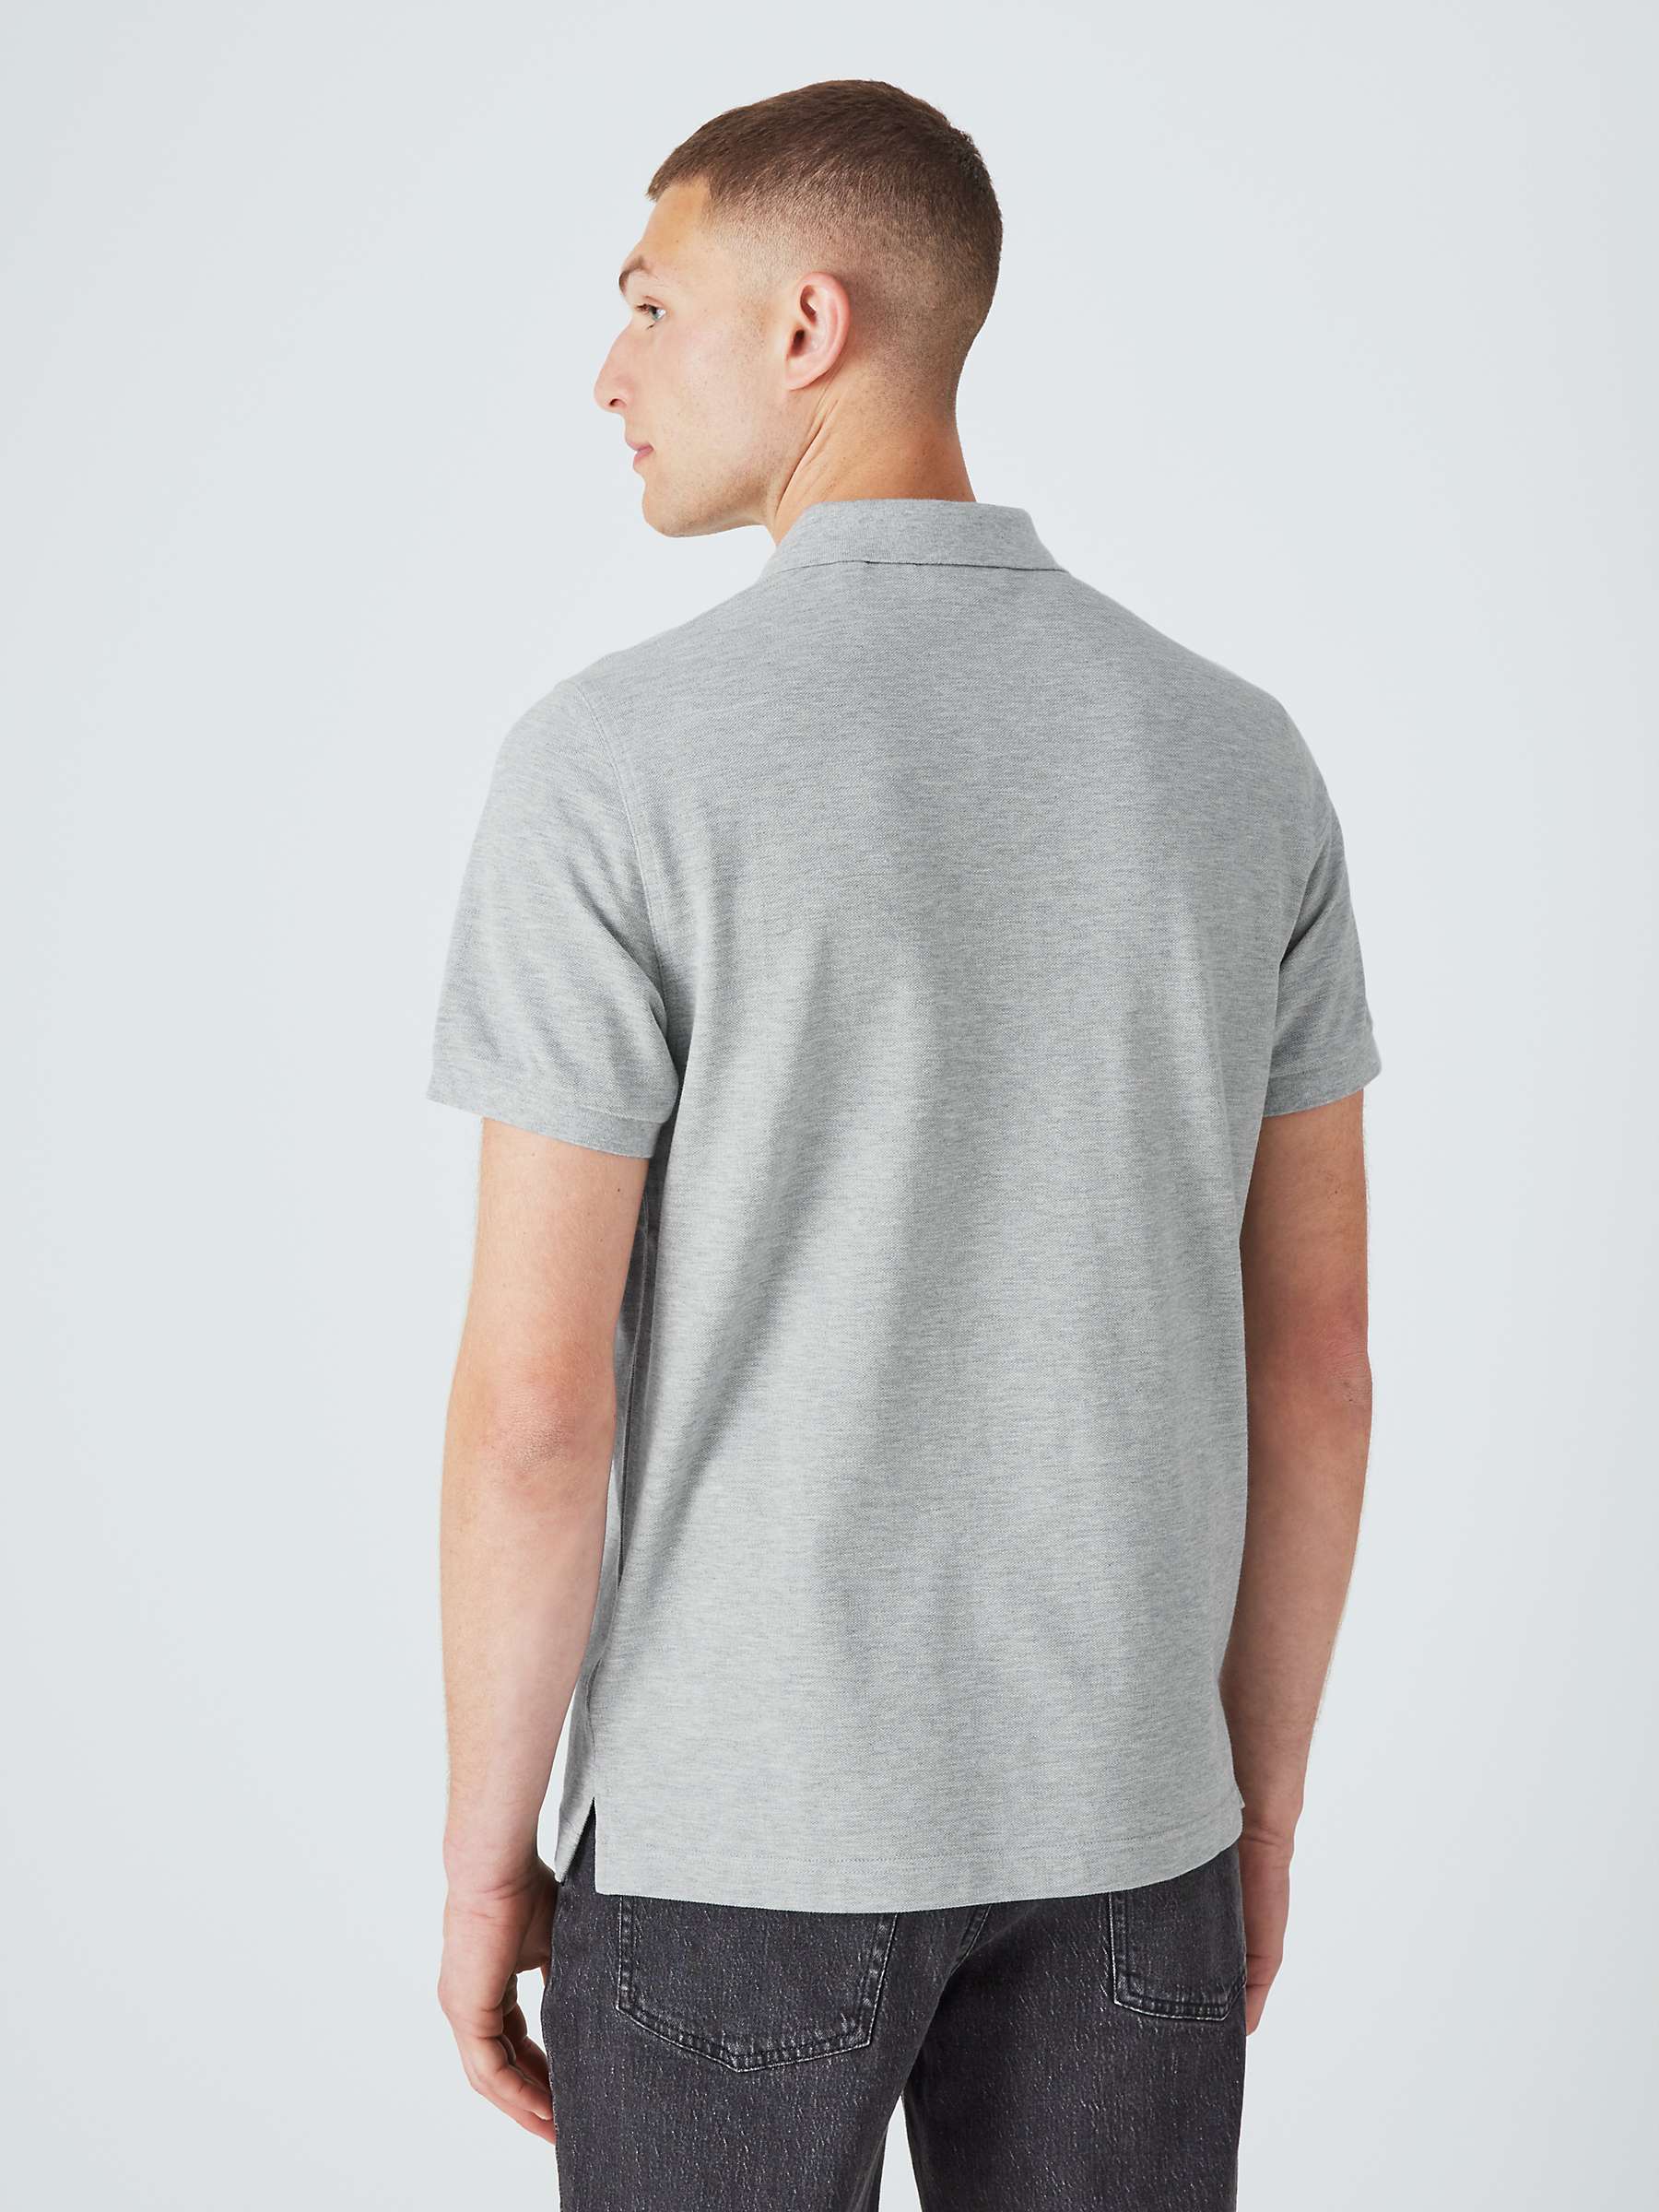 Buy GANT Piqué Shield Short Sleeve Regular Fit Polo Shirt Online at johnlewis.com